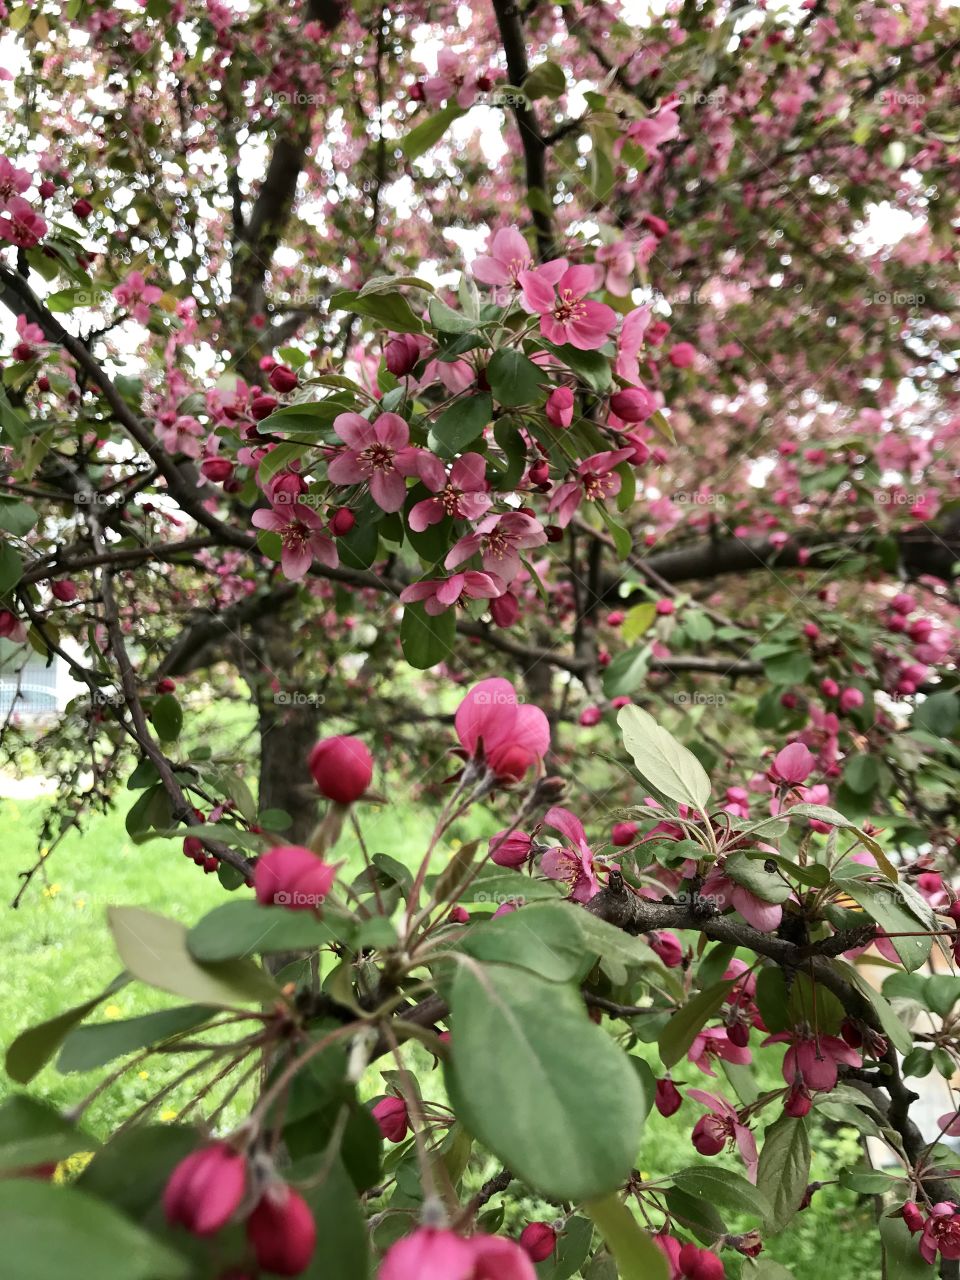 Apple’s pink flowers 